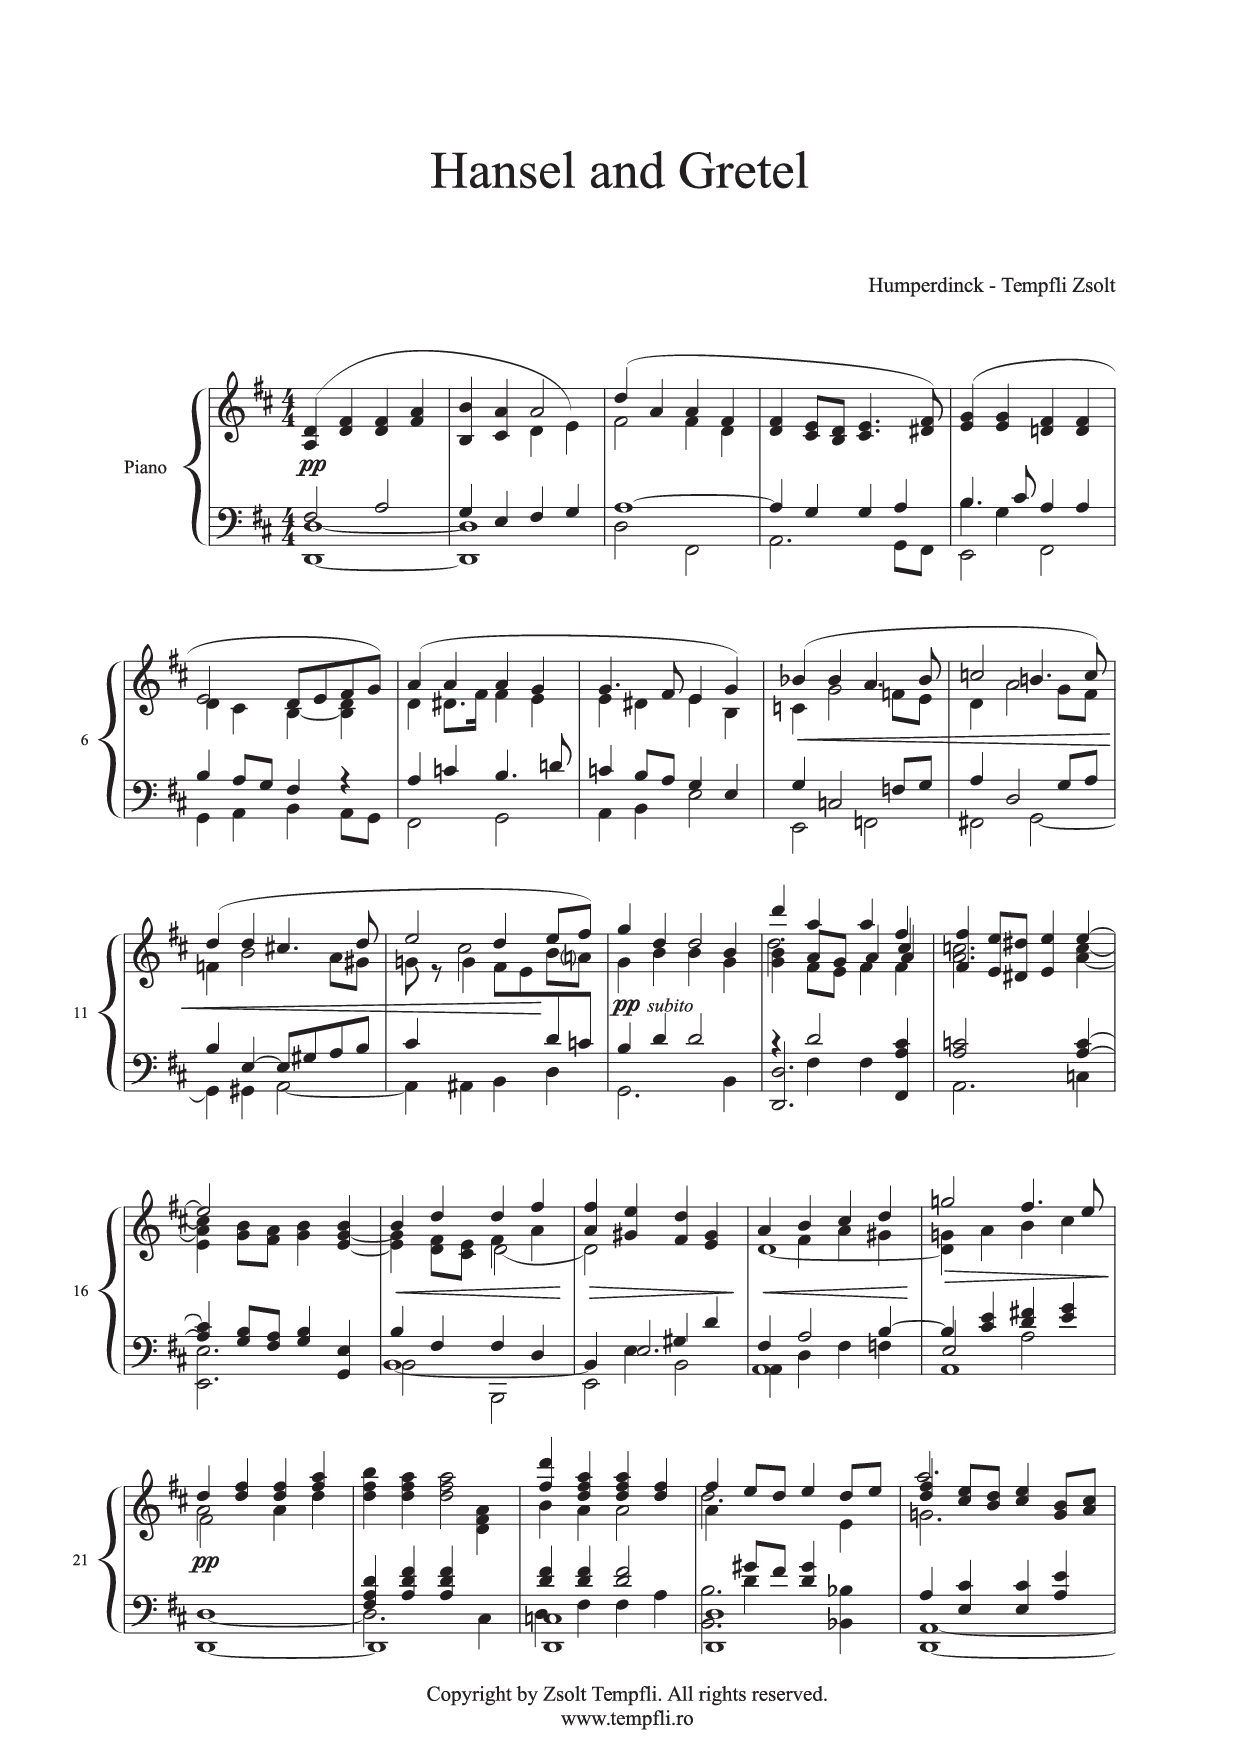 Engelbert Humperdinck - Zsolt Tempfli: Hänsel und Gretel Dream scene and pantomime piano transcription (op. 28)